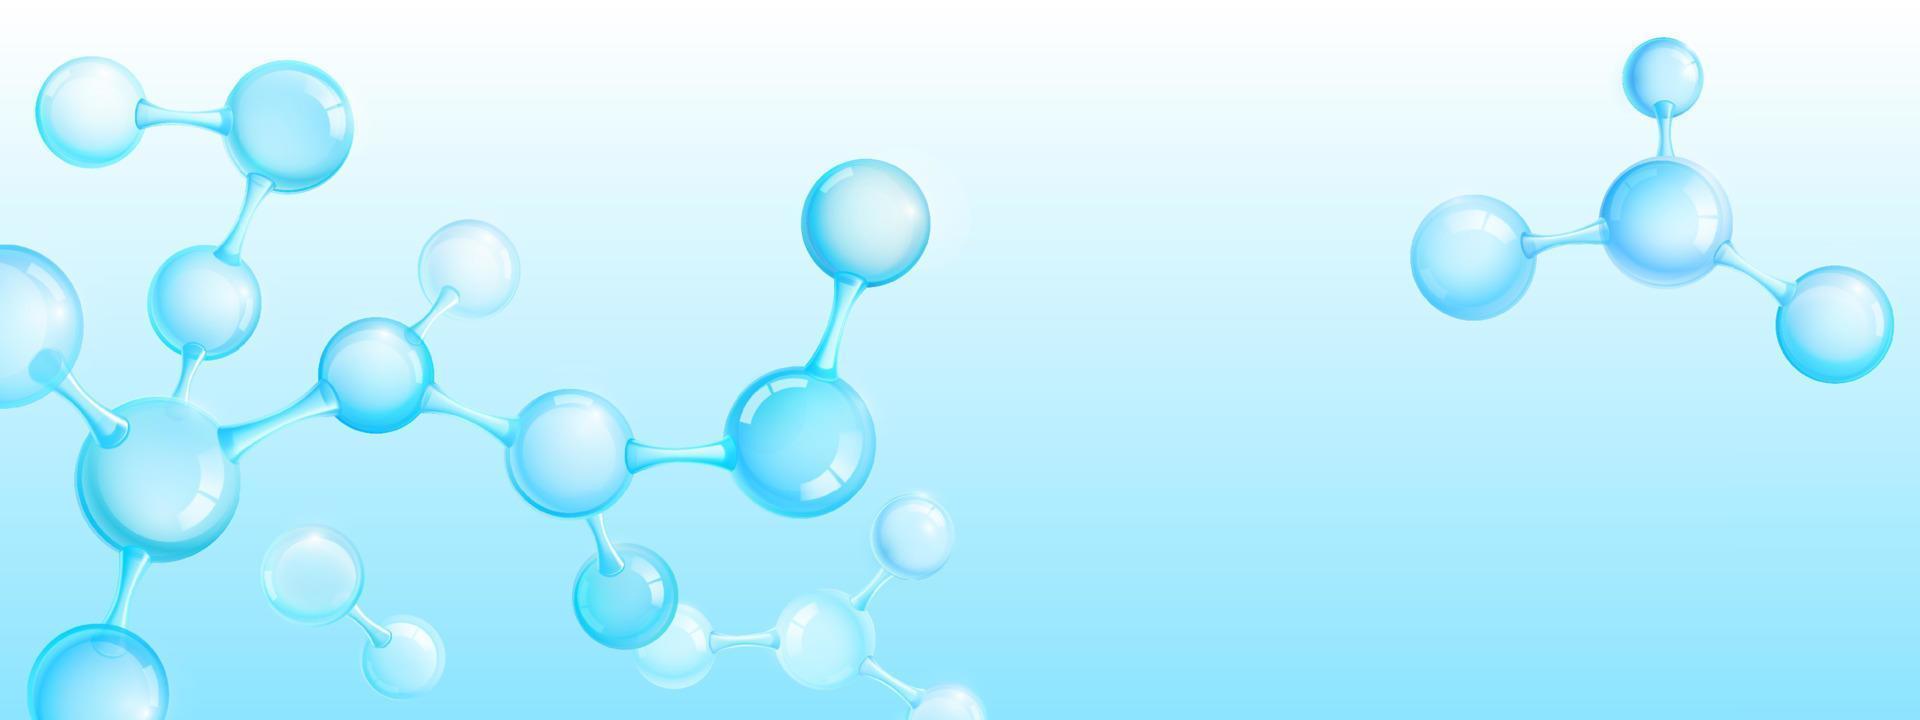 abstrakt molekyler på blå bakgrund, vektor